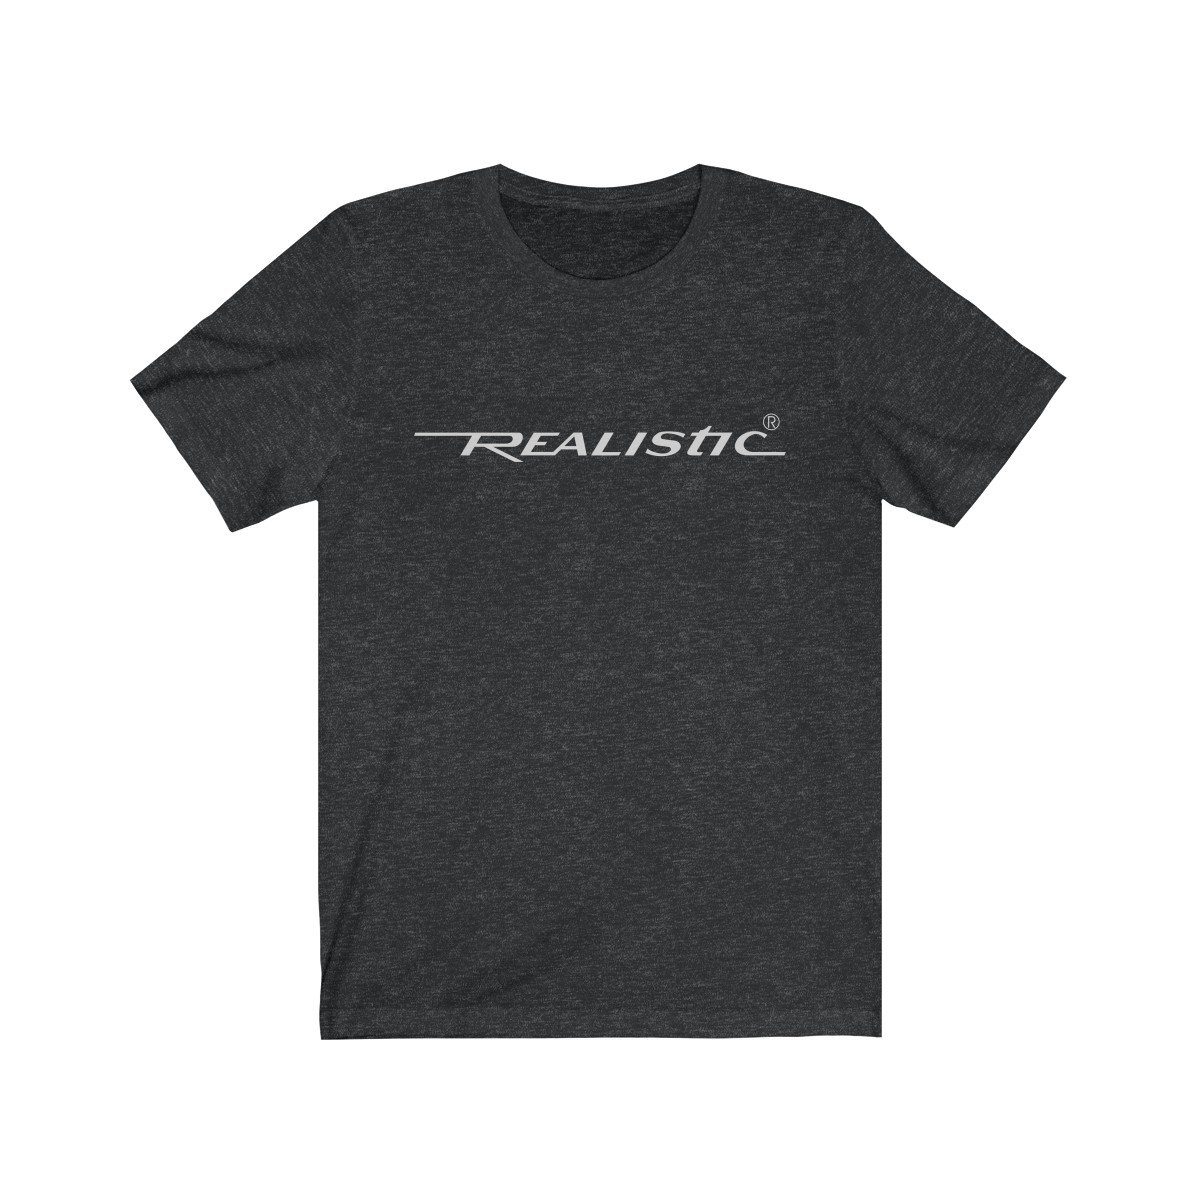 Image of Retro RadioShack Realistic T-Shirt